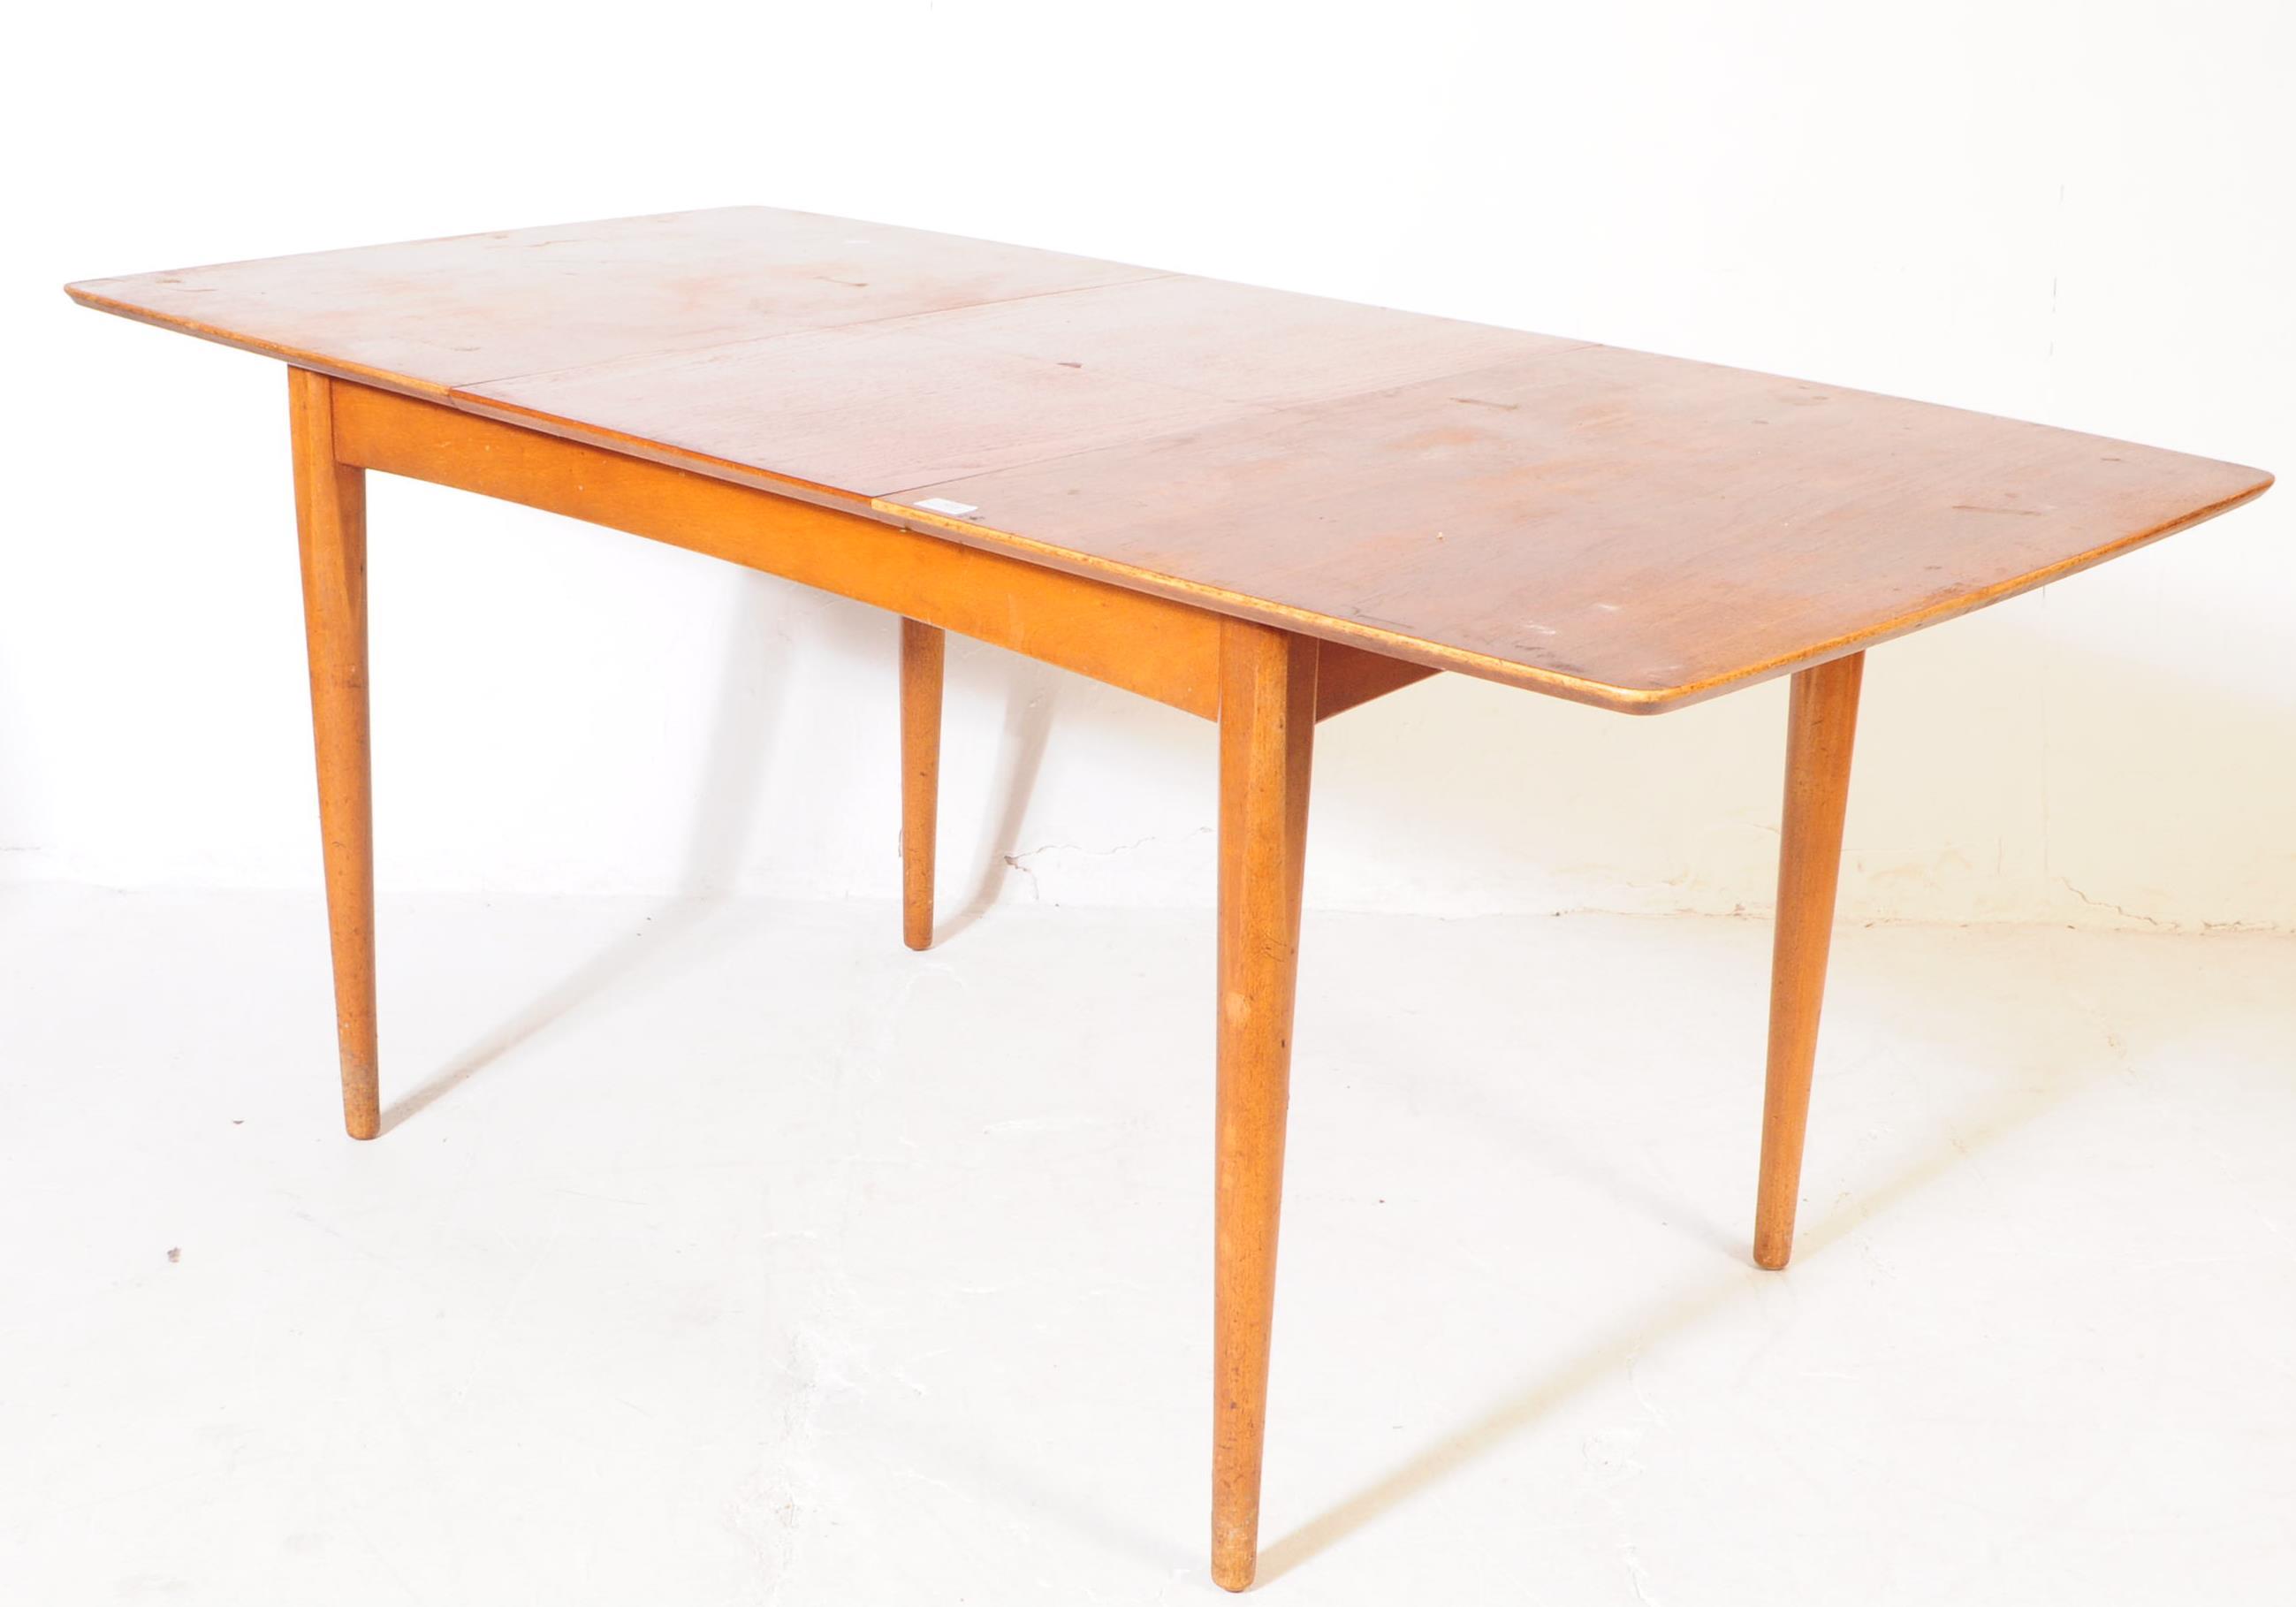 BRITISH MODERN DESIGN - MID CENTURY TEAK TABLE & CHAIRS - Image 5 of 8